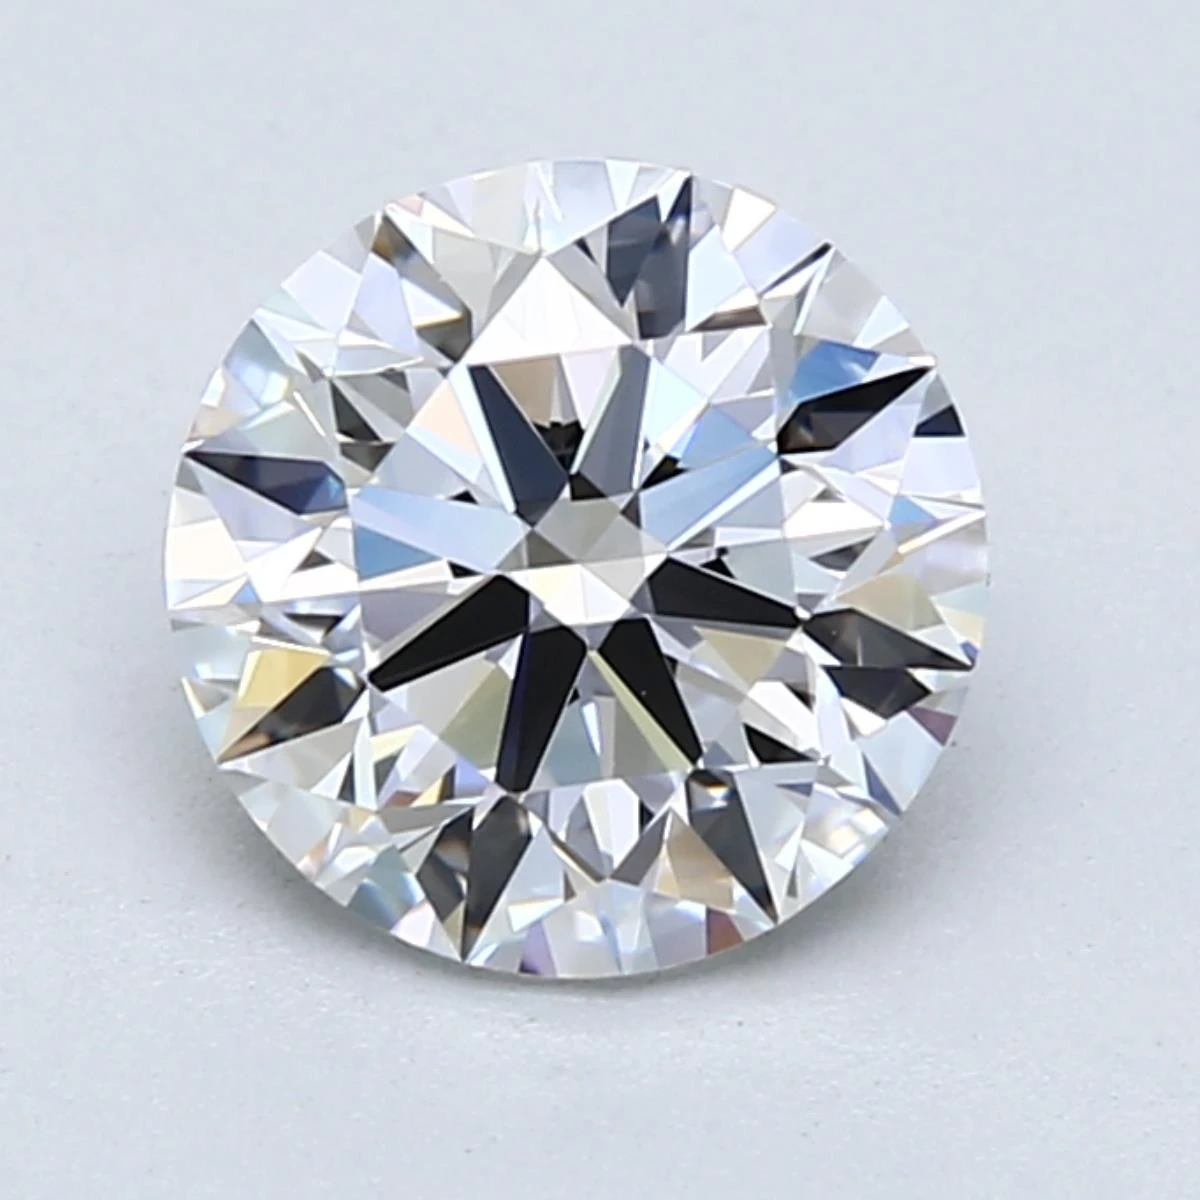 2 carat d color diamond with VVS1 clarity